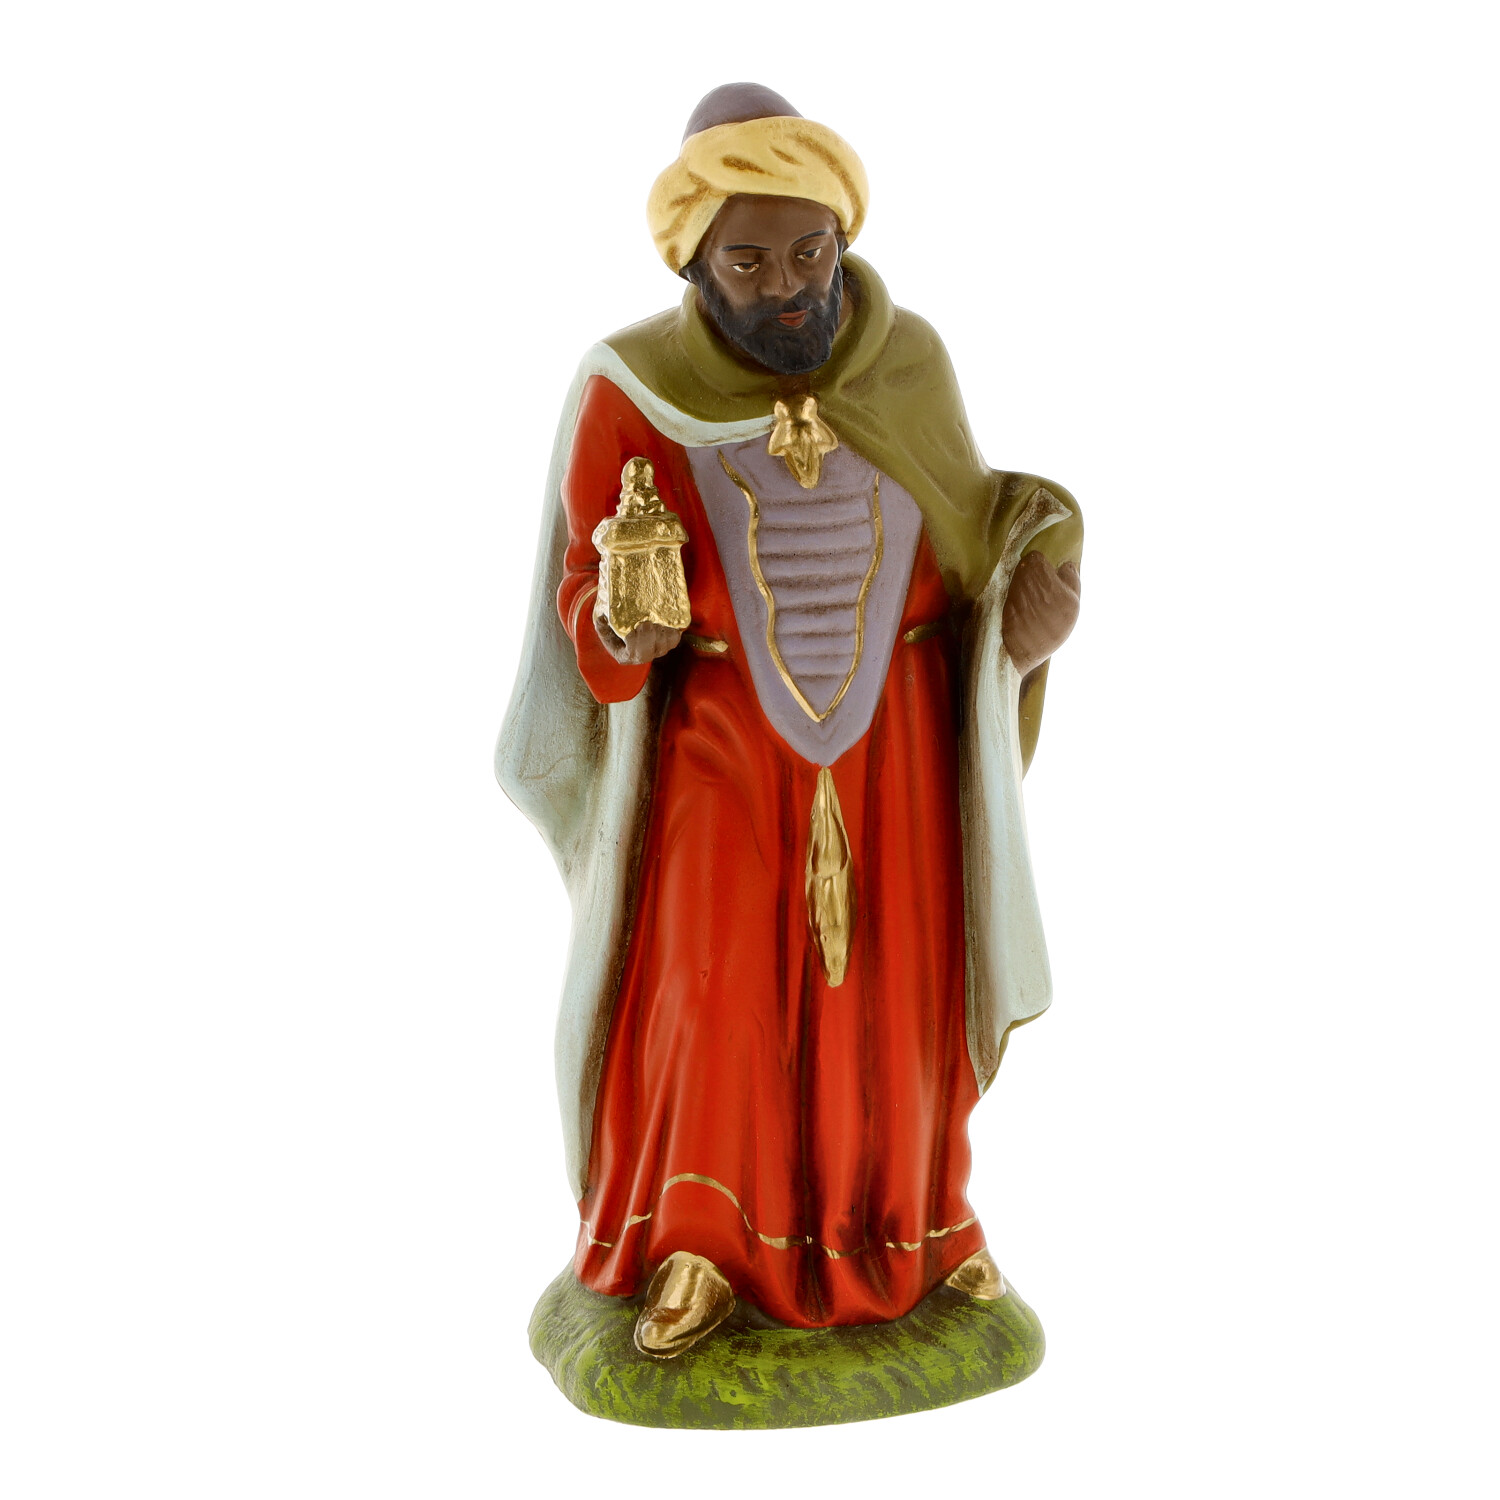 Black King - Marolin Nativity figure - made in Germany